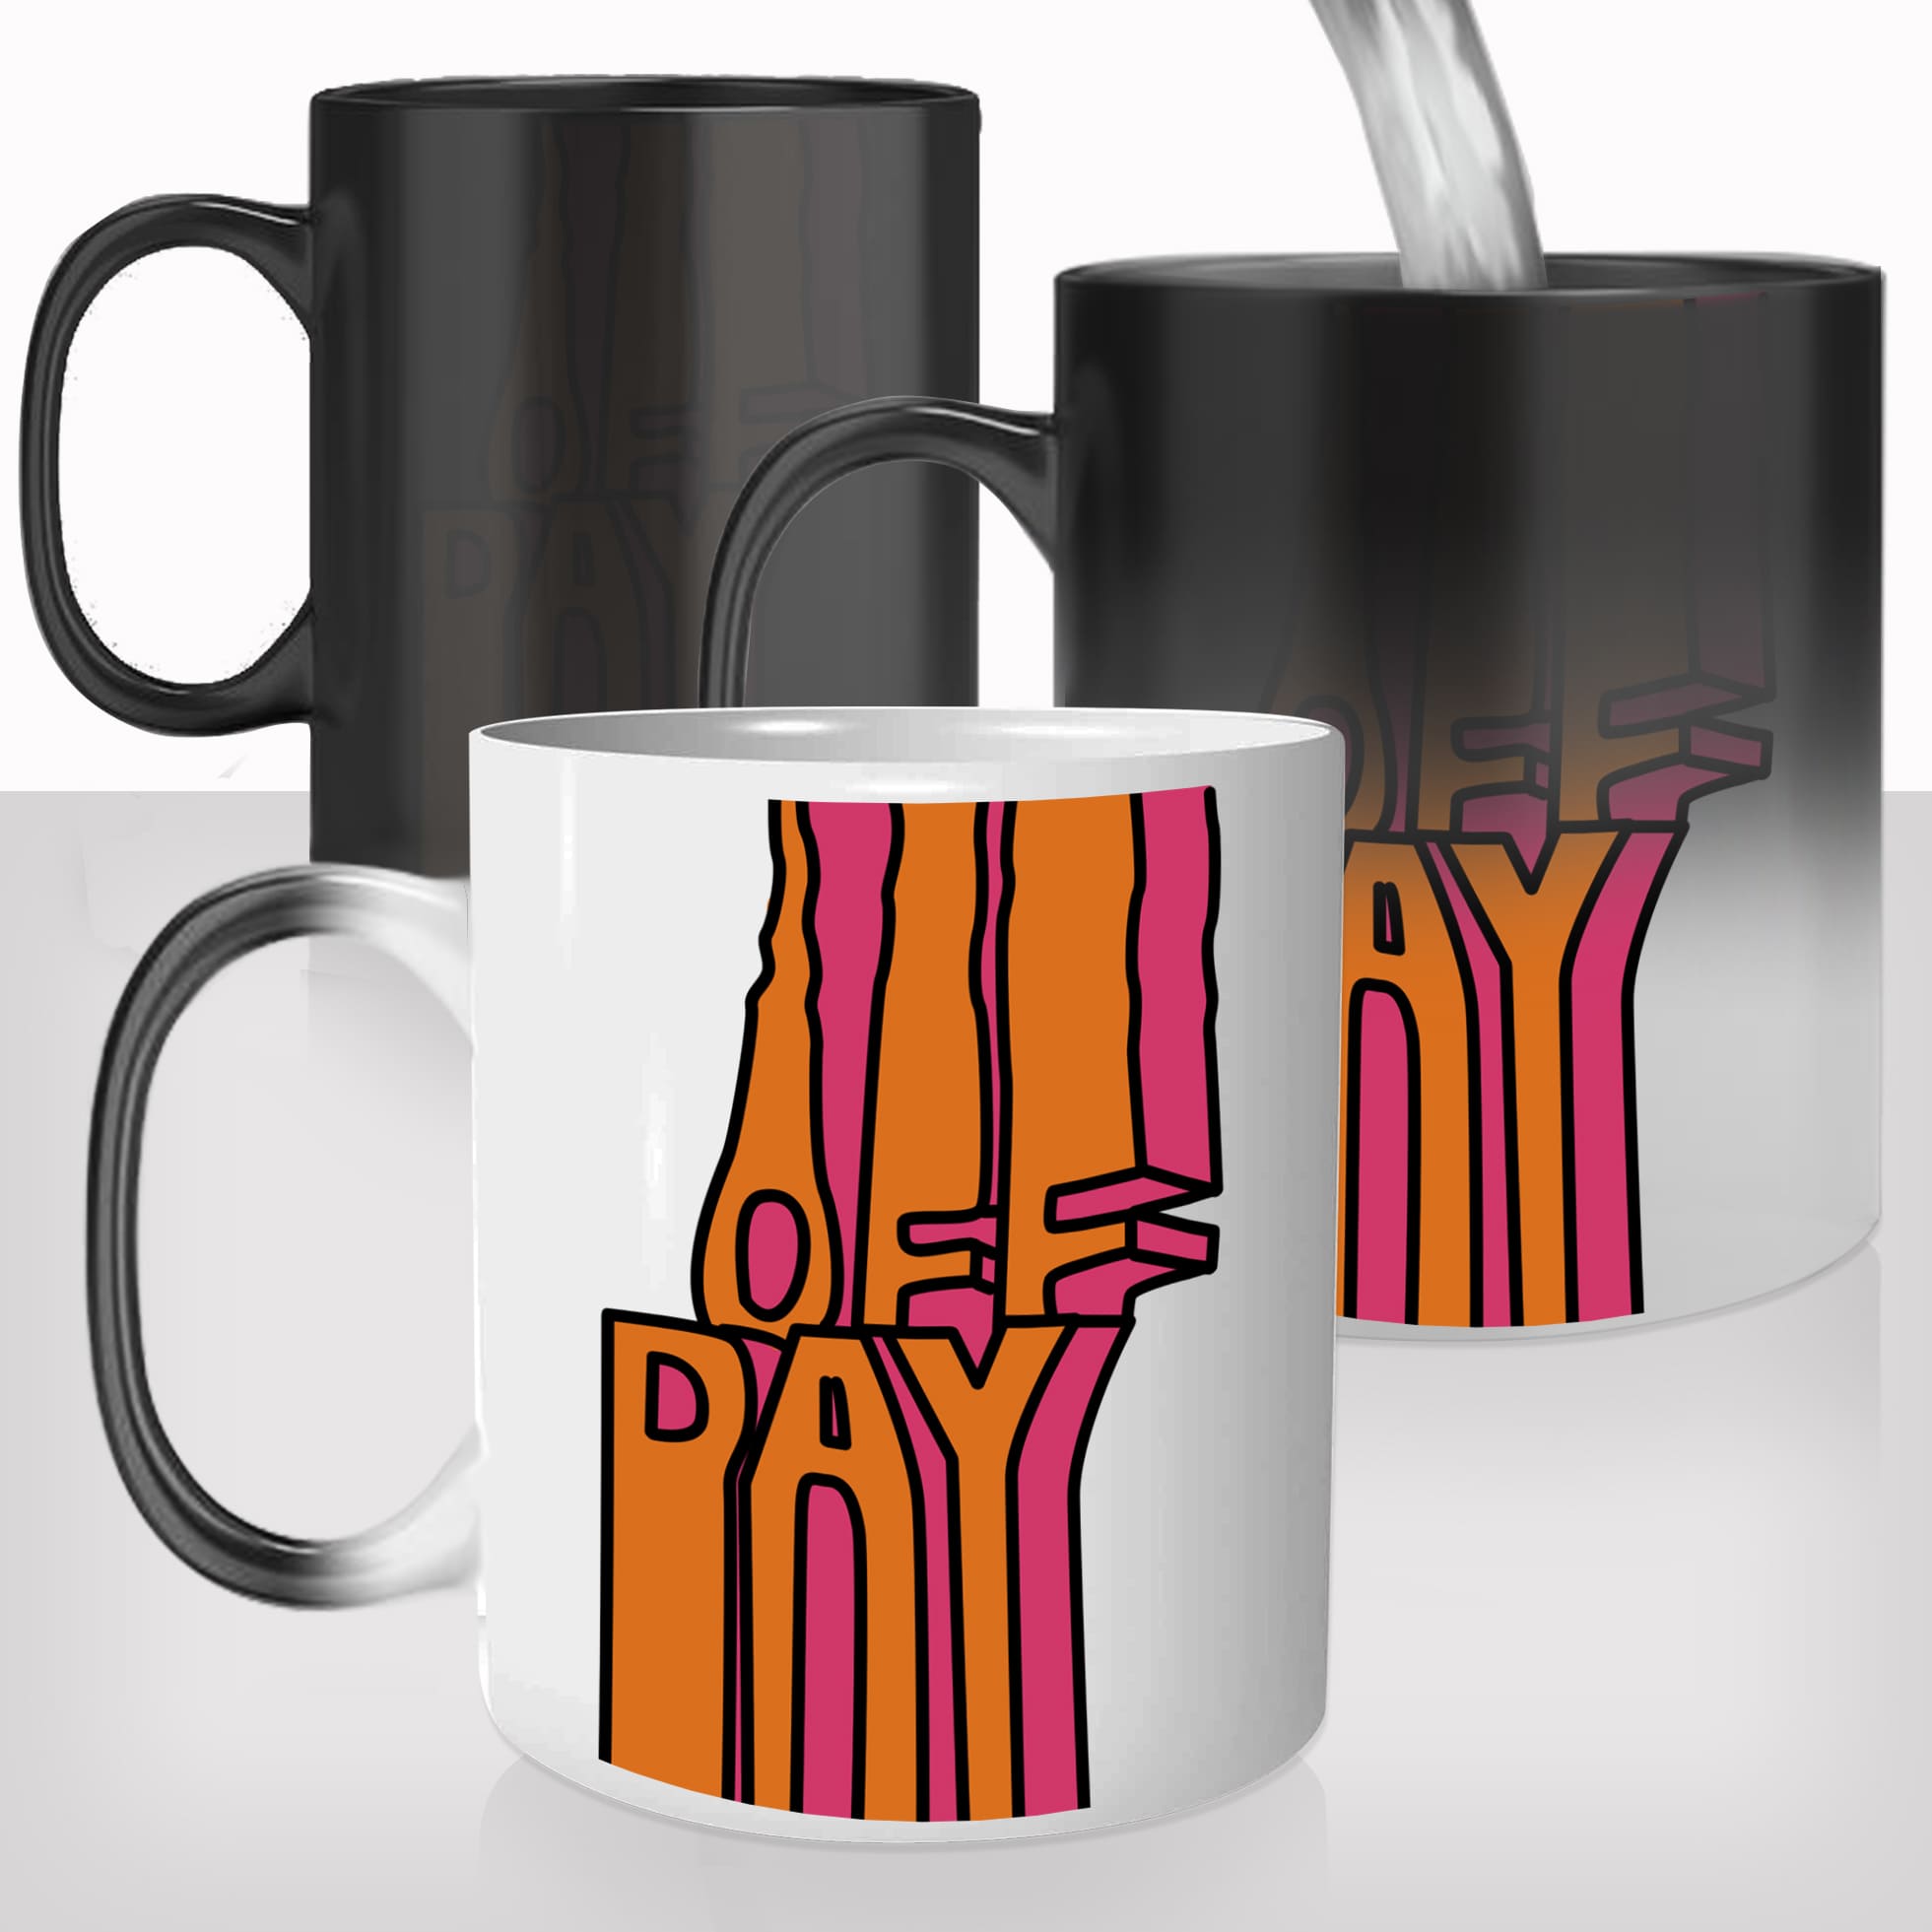 mug-magique-tasse-magic-thermo-reactif-citation-day-off-jour-de-repos-travail-collegue-dessin-unique-offrir-cadeau-original-fun